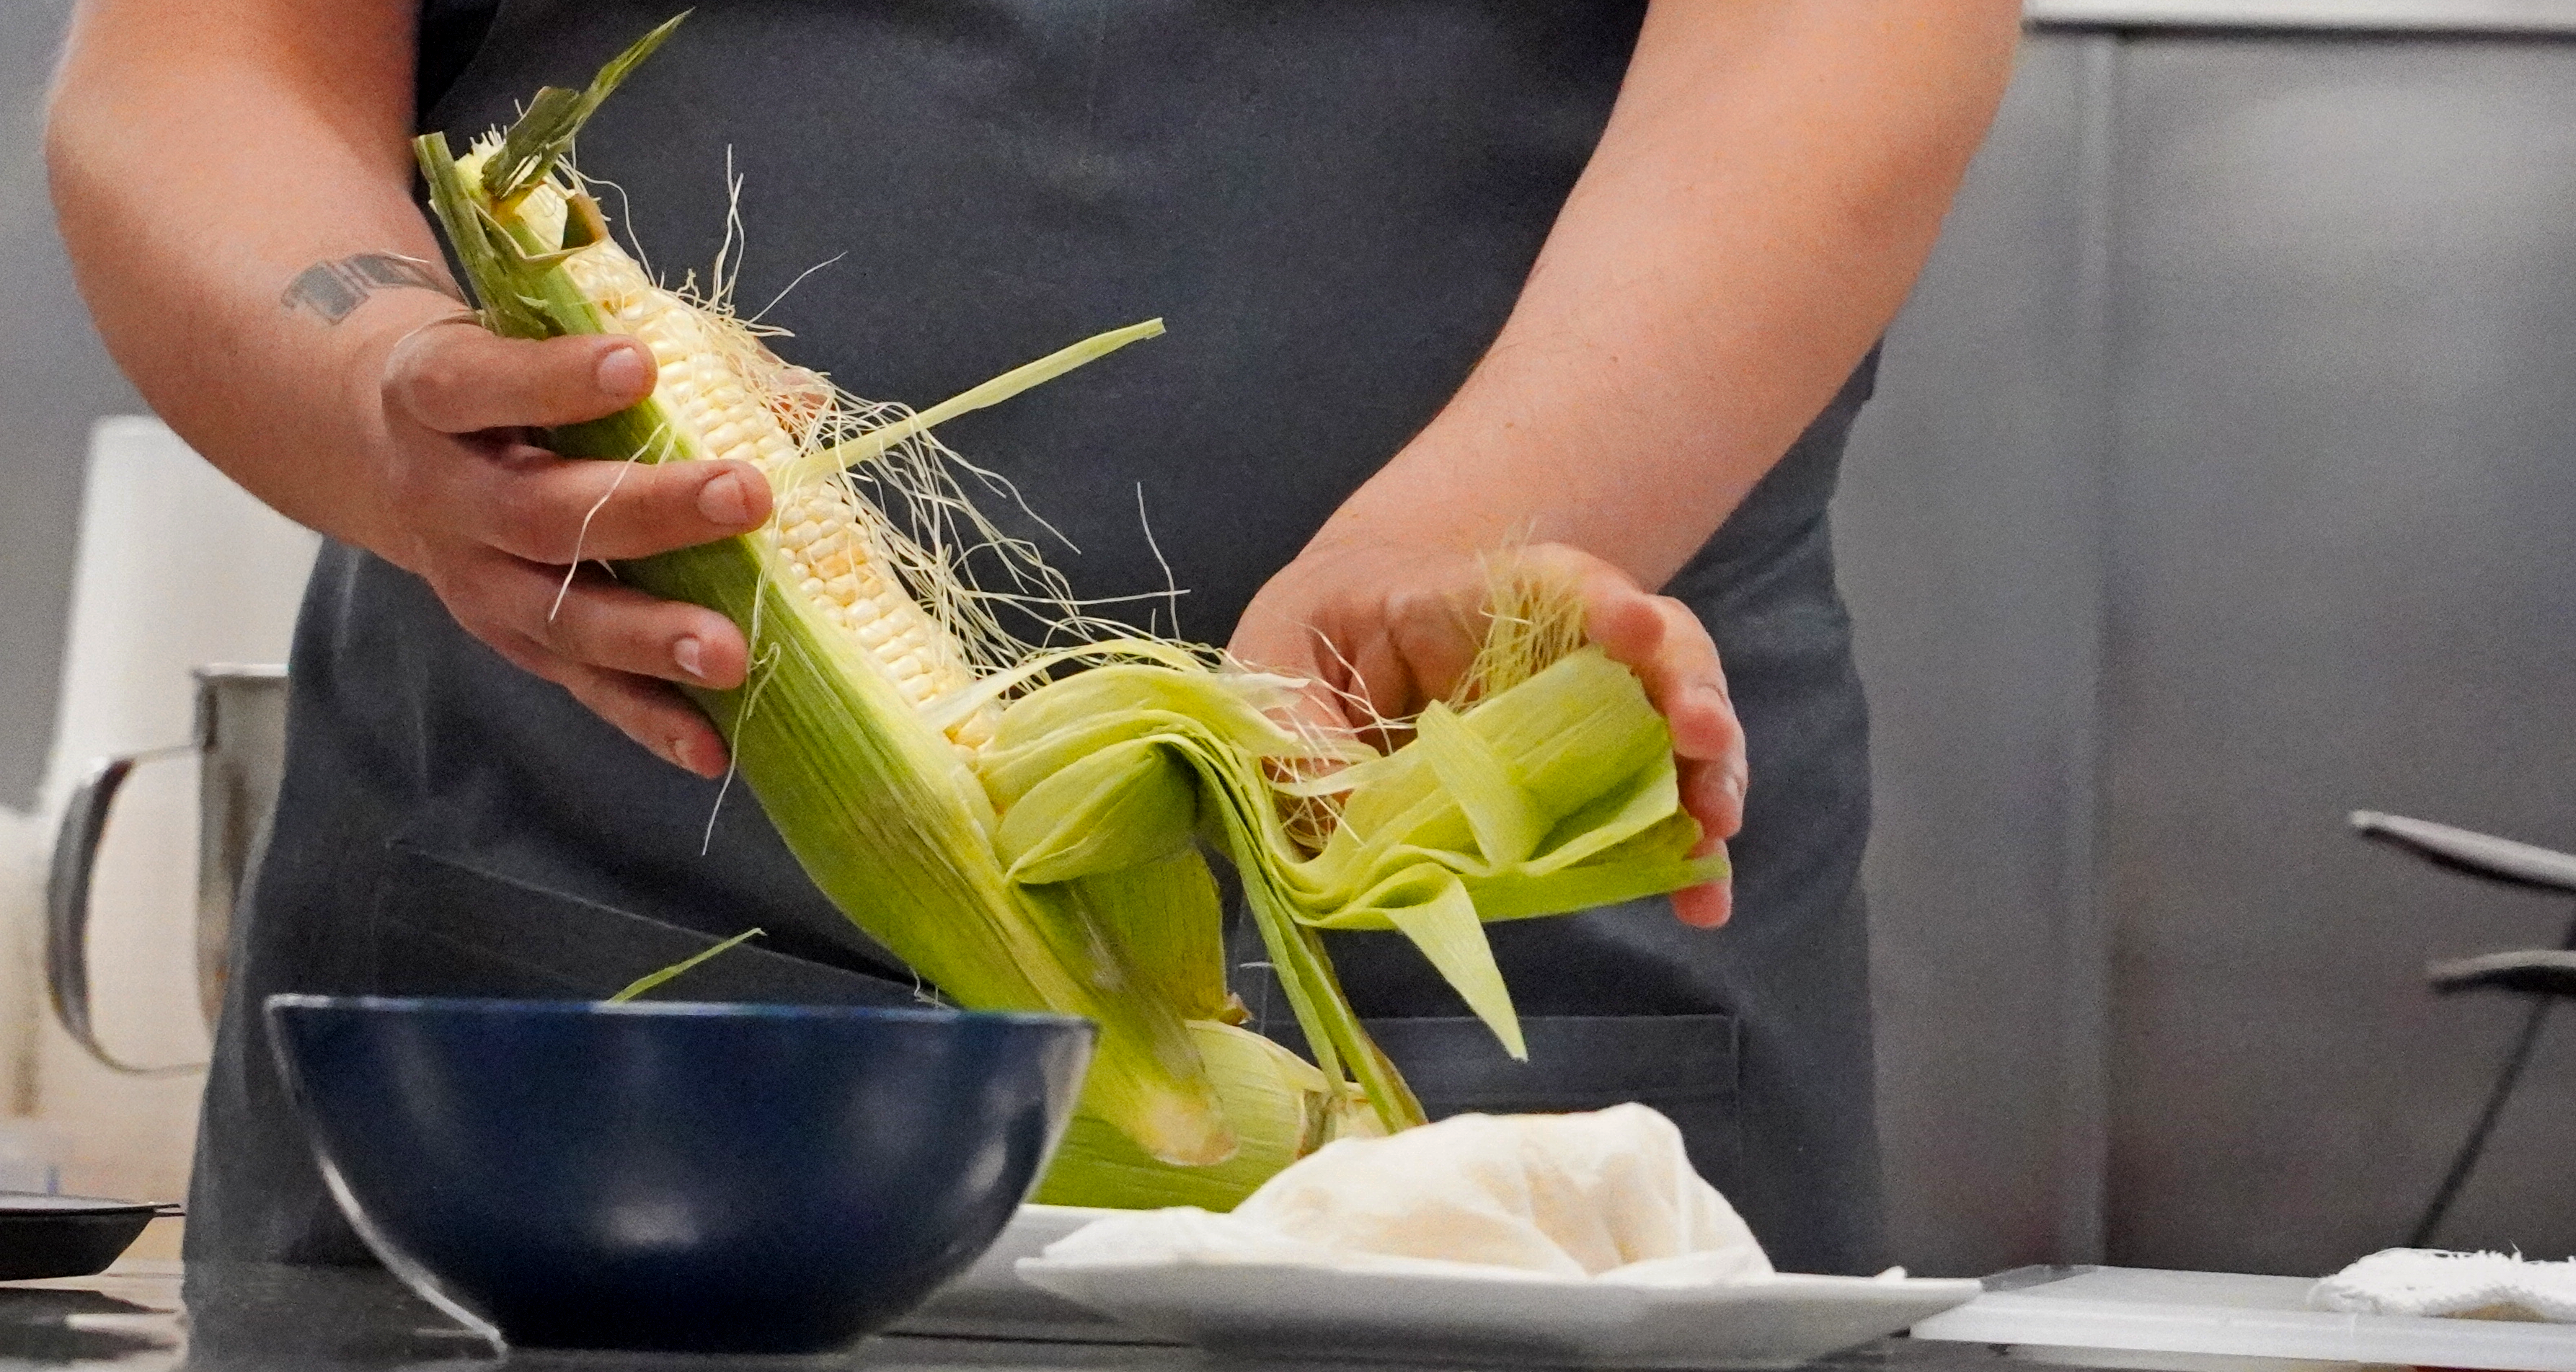 Chef Cervantes shucks an ear of corn